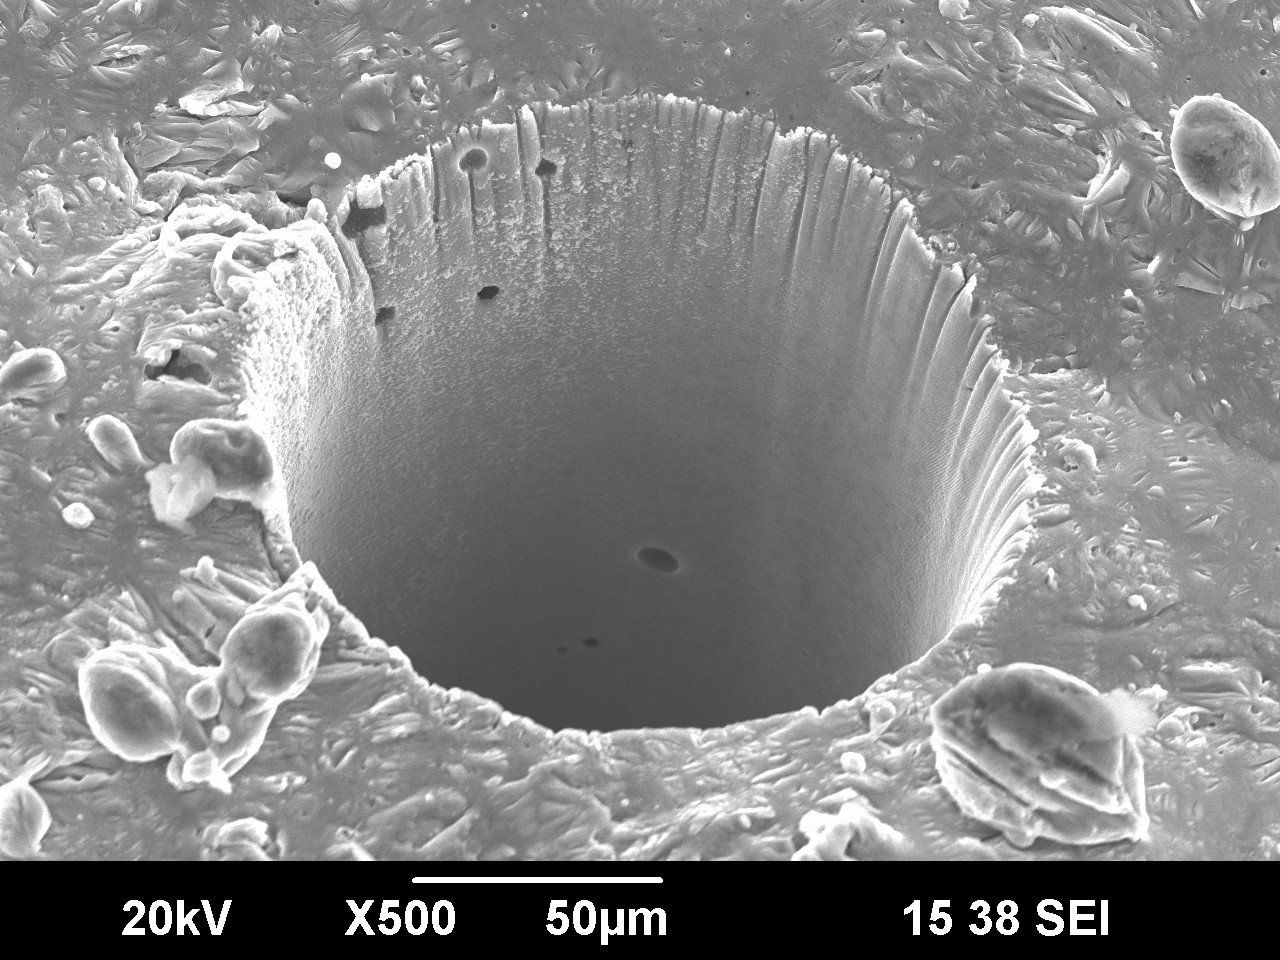 Microhole in additive manufactured aluminum